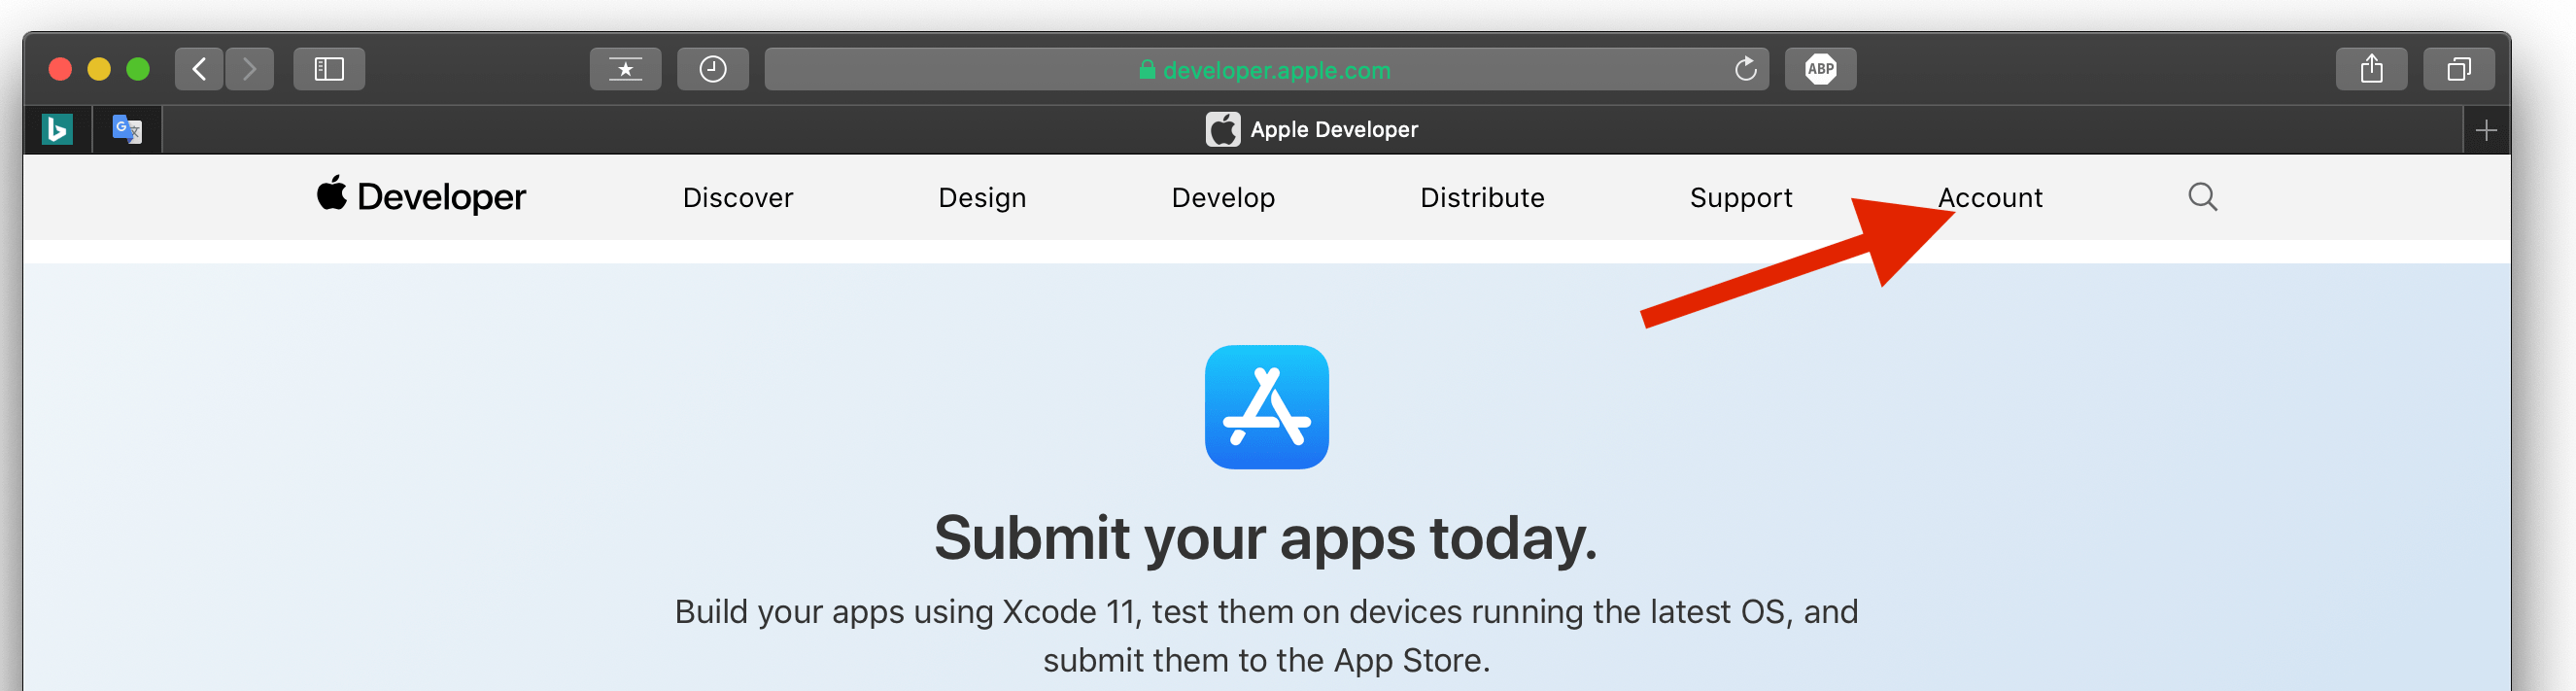 command line tools for xcode idmsa.apple.com